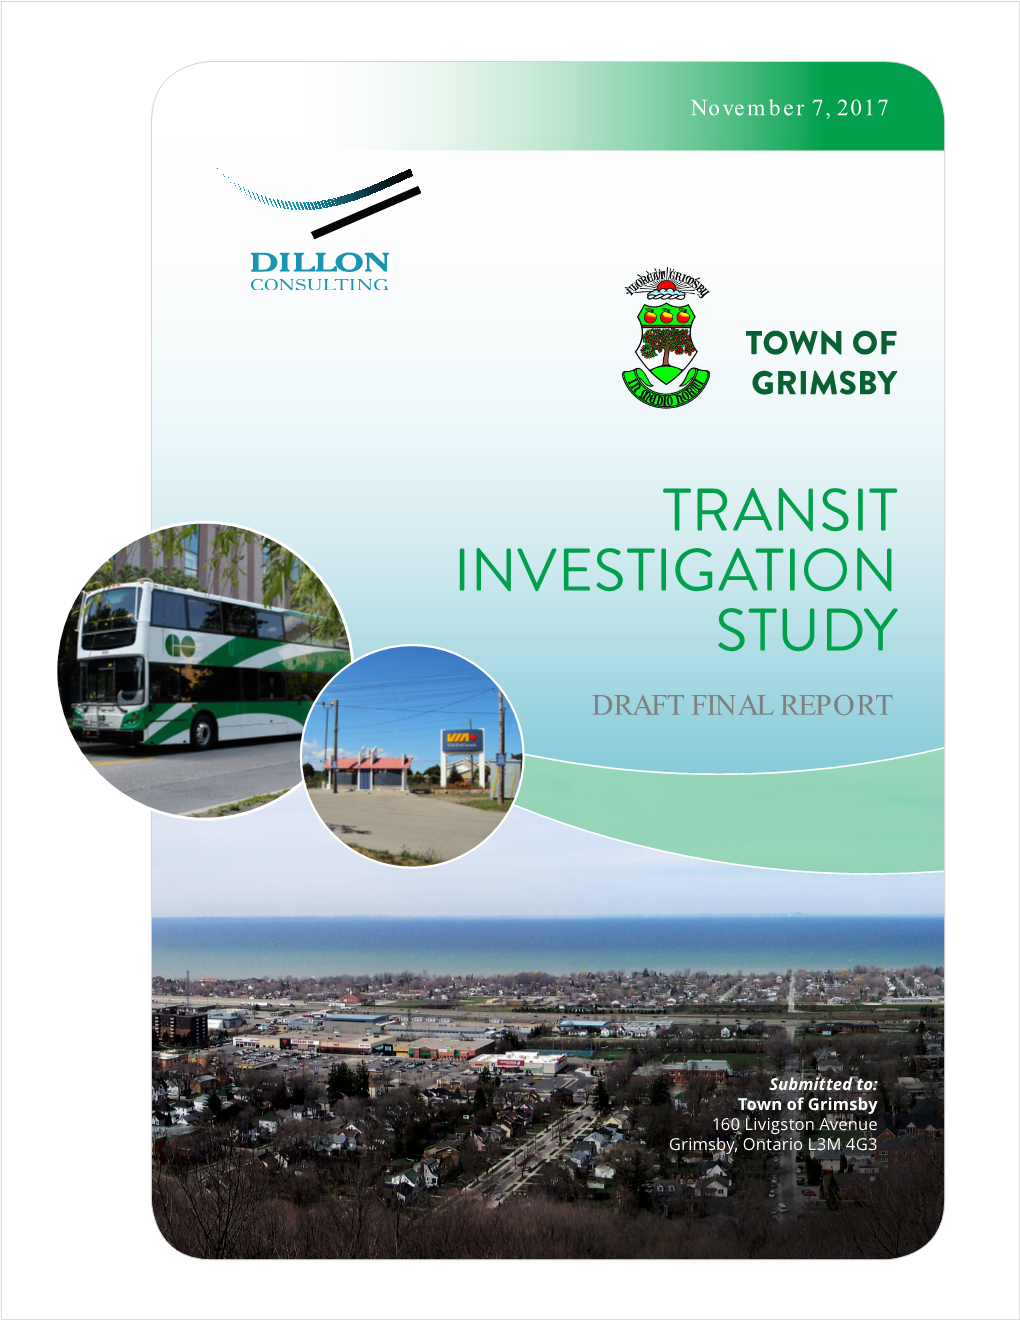 Transit Investigation Study Draft Final Report